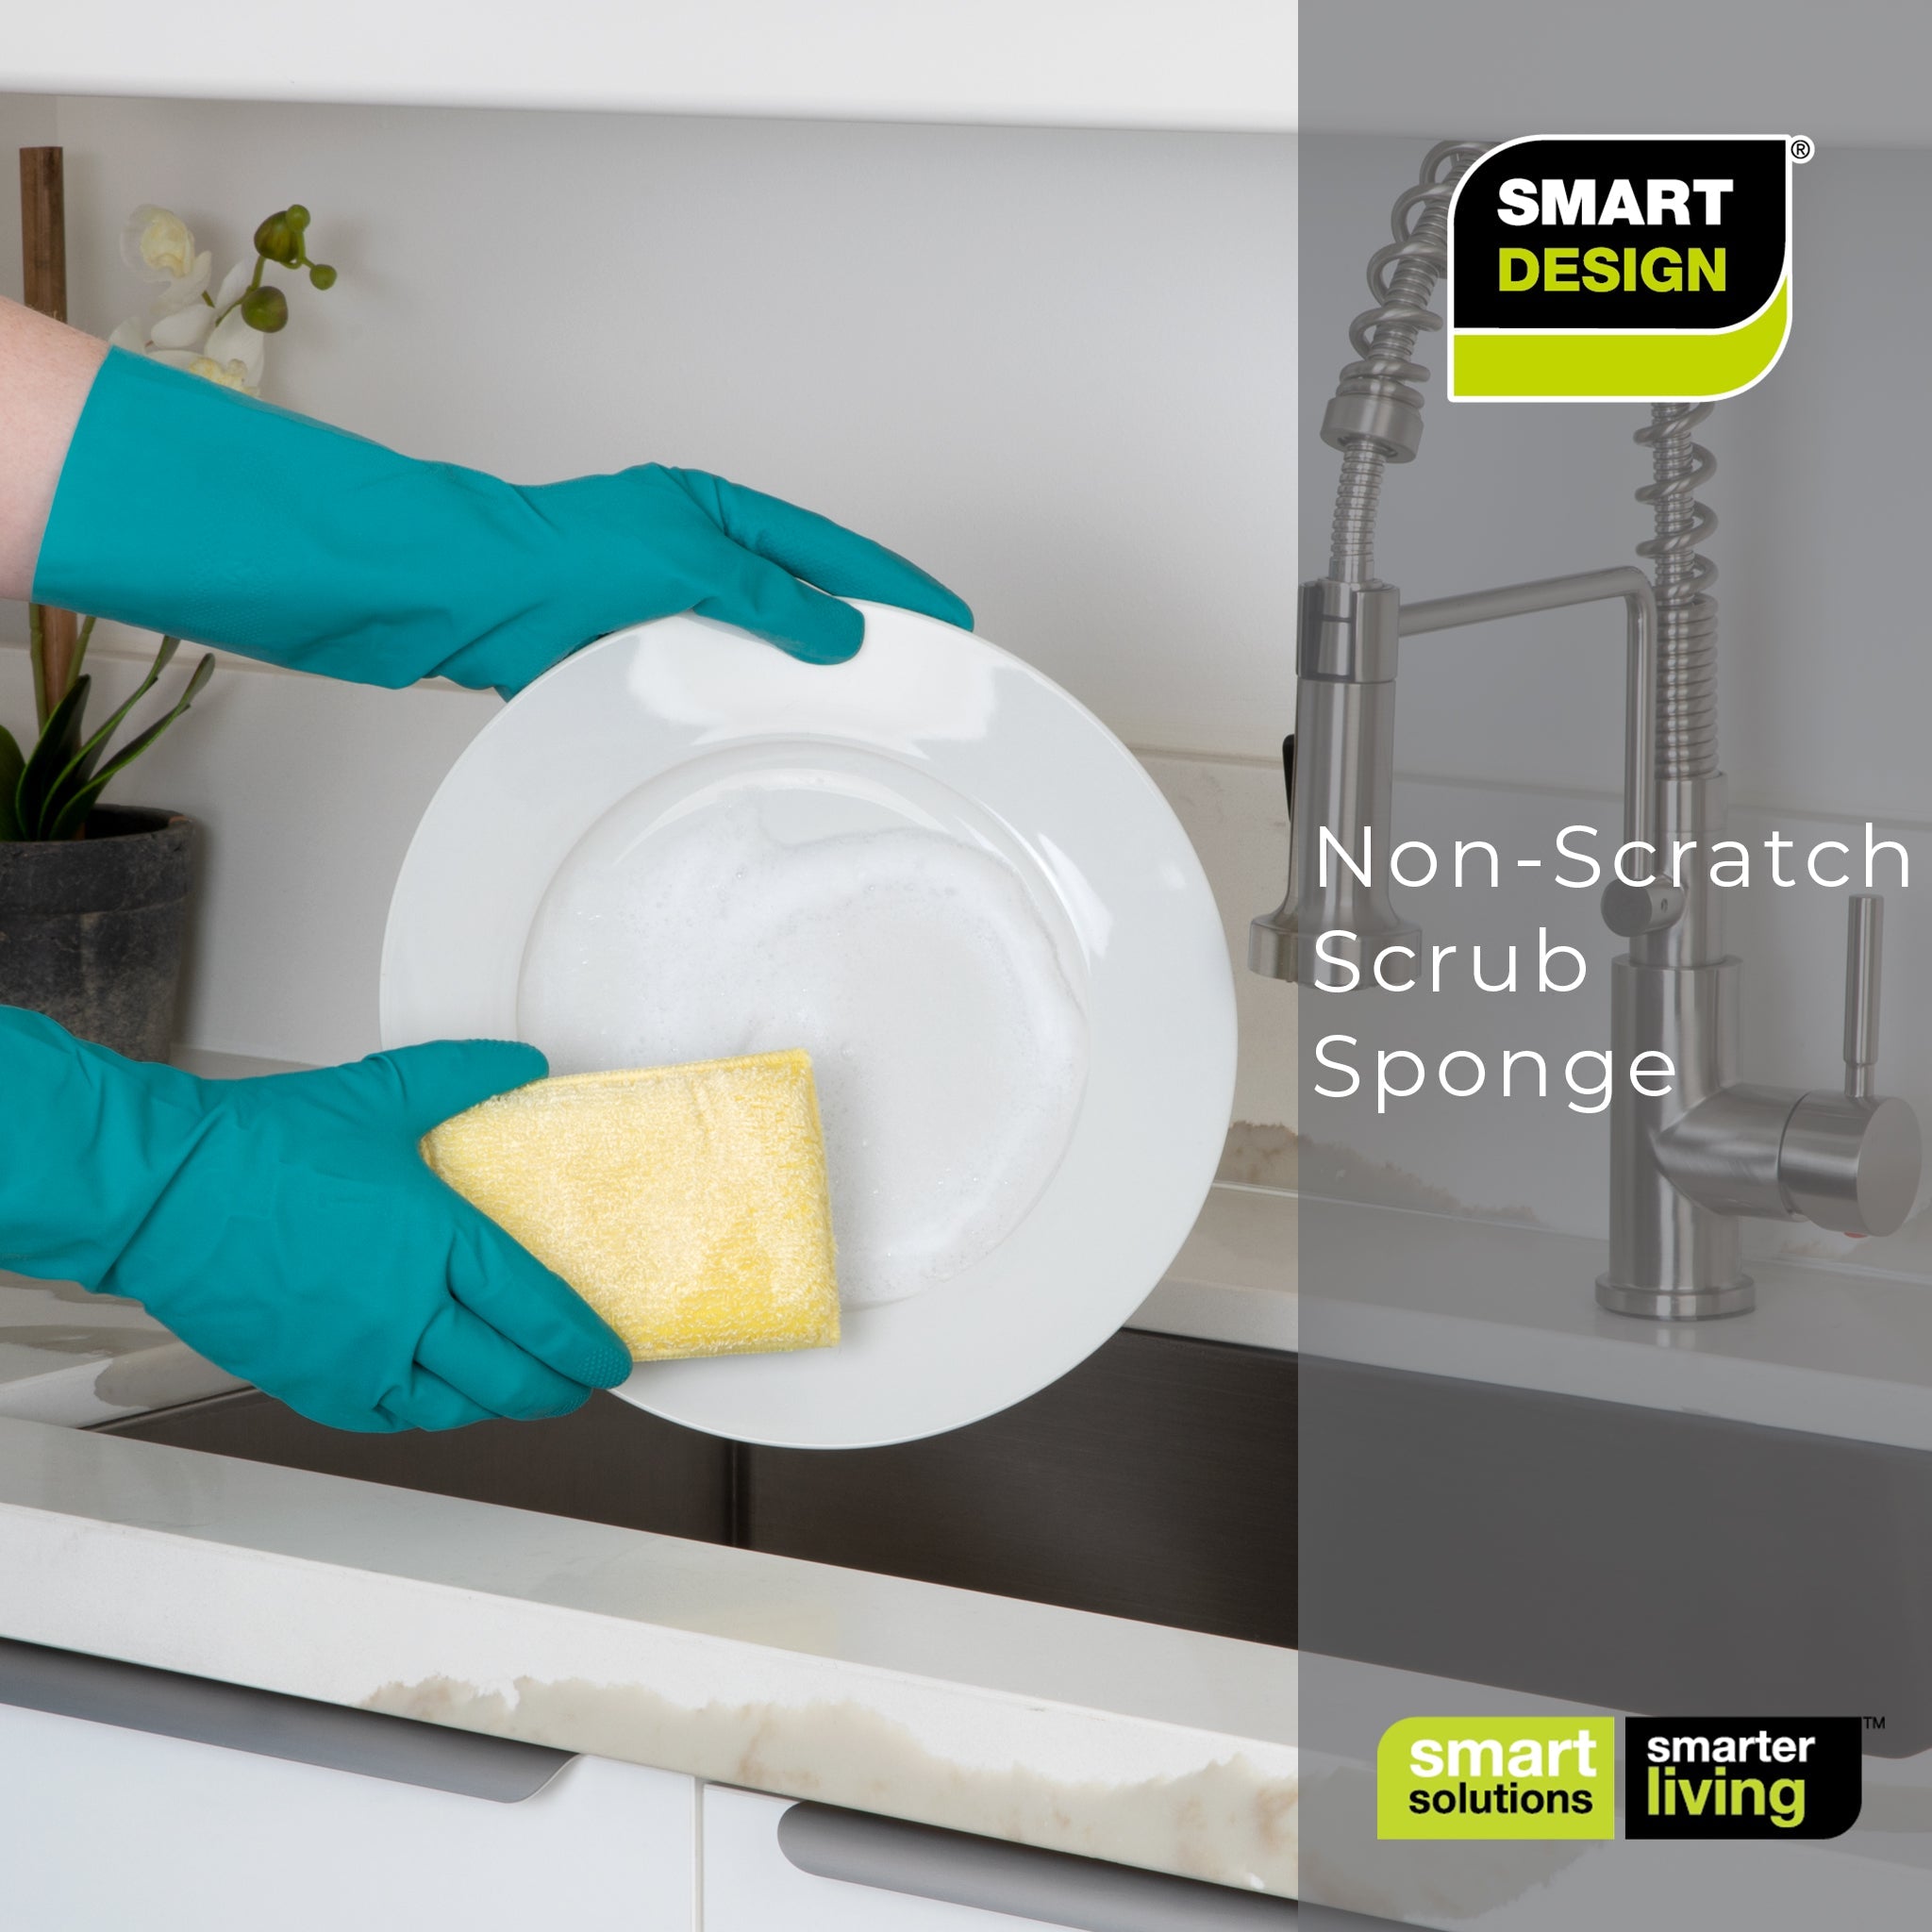 Non-Scratch Scrub Sponge with Bamboo Odorless Rayon Fiber - Smart Design® 35